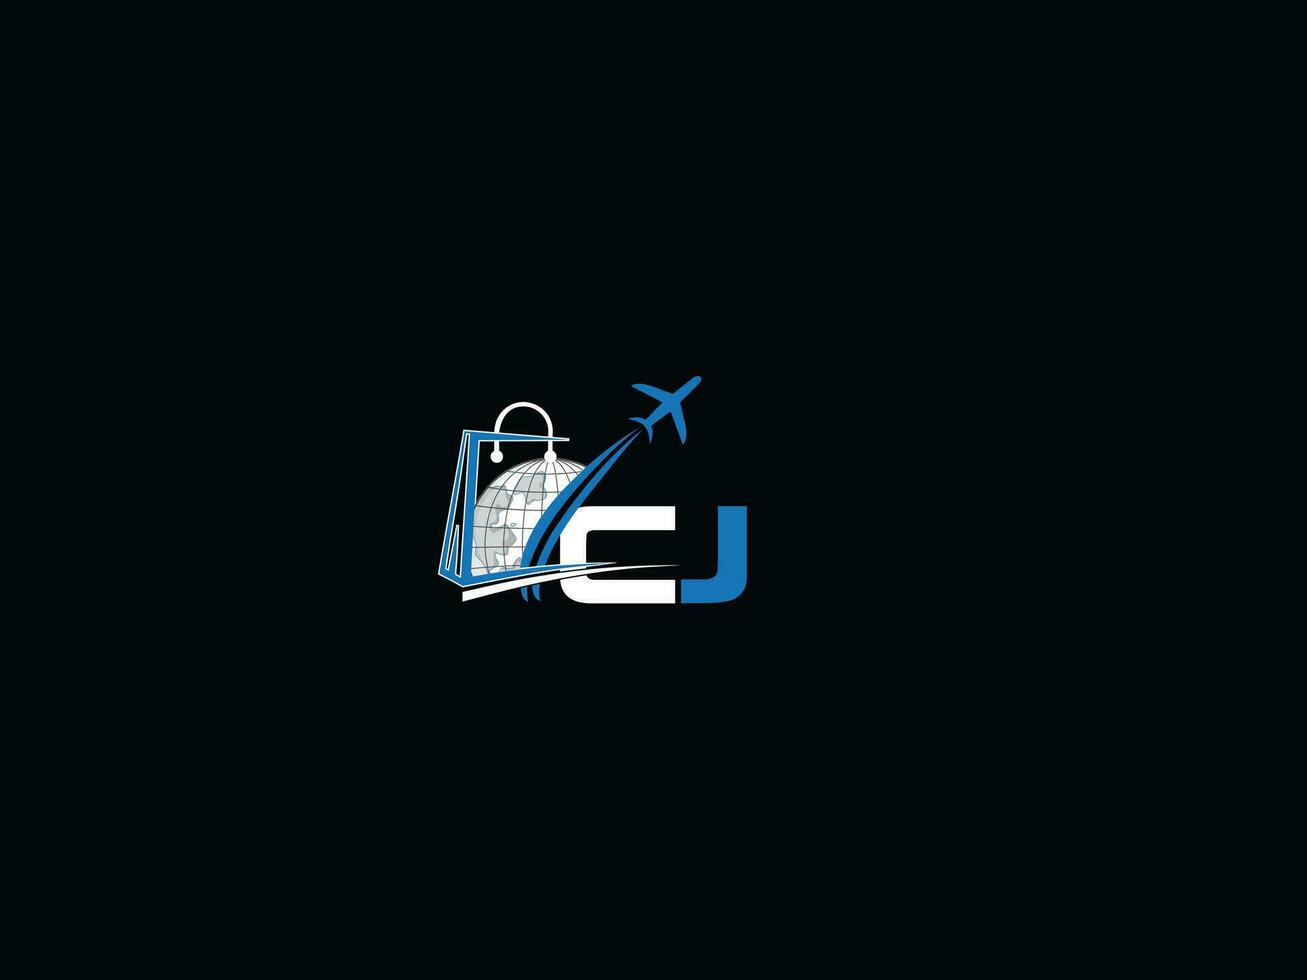 creativo cj logo símbolo, monograma cj viaje logo letra vector